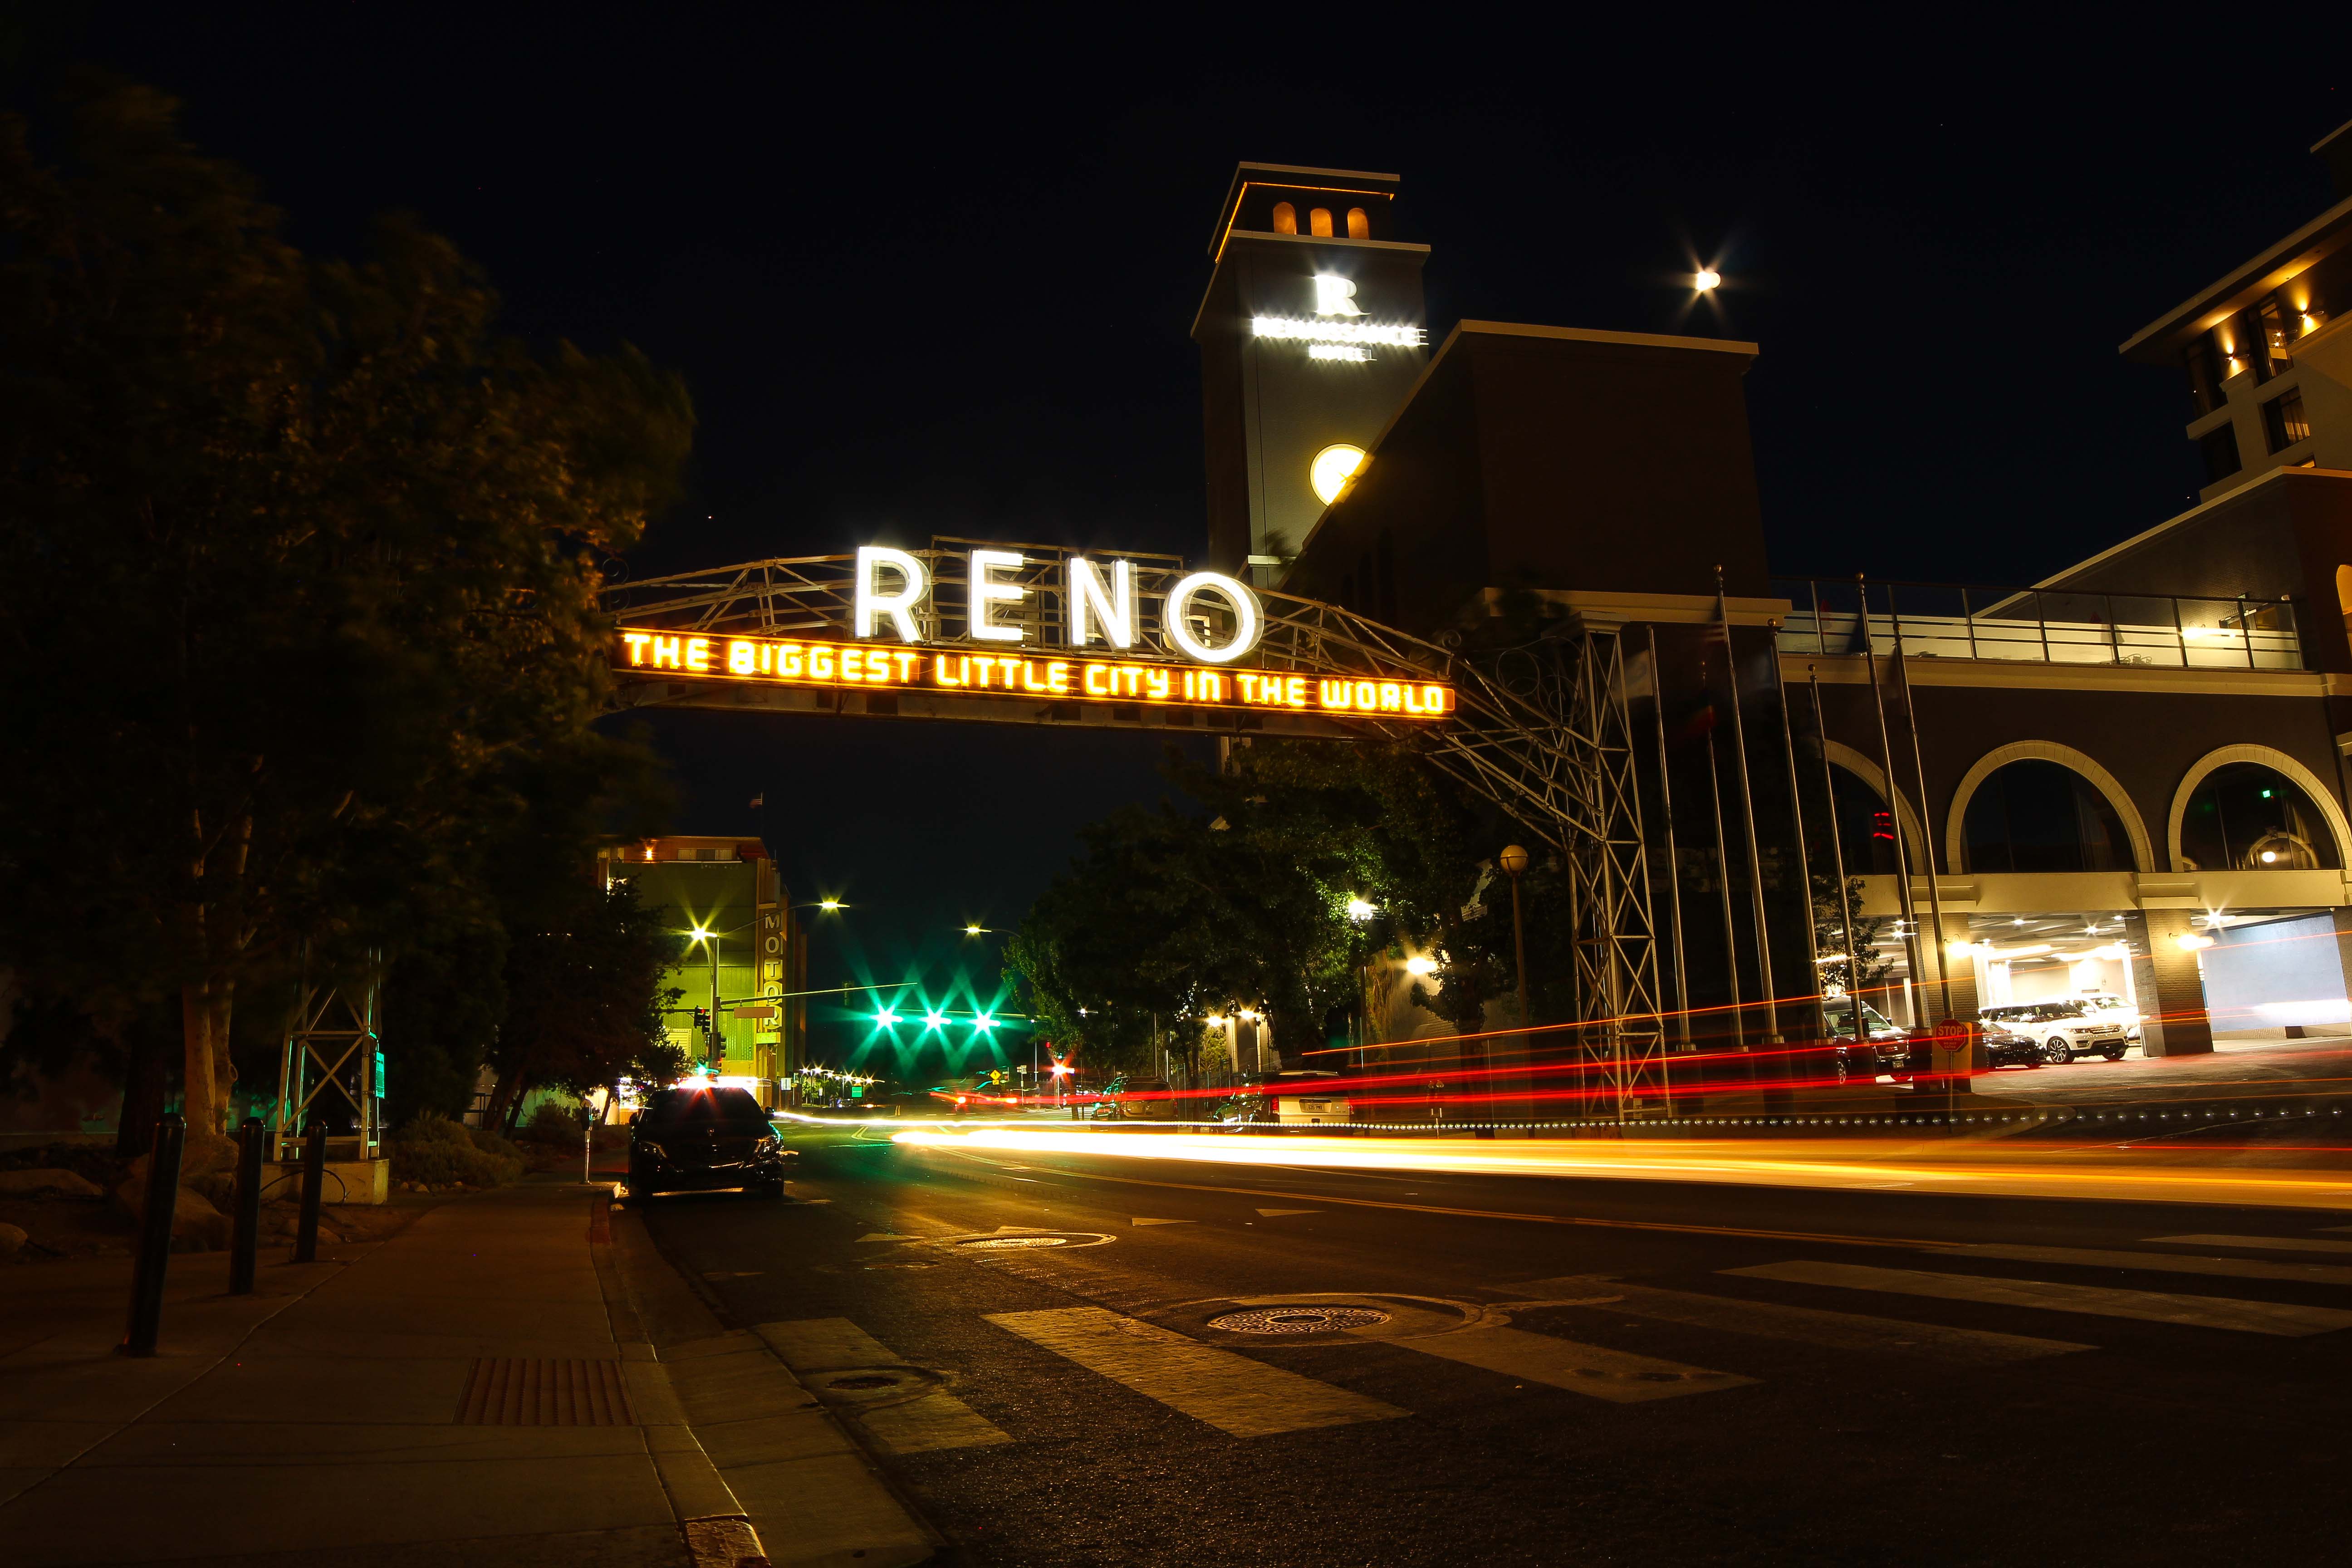 Reno's arch construction